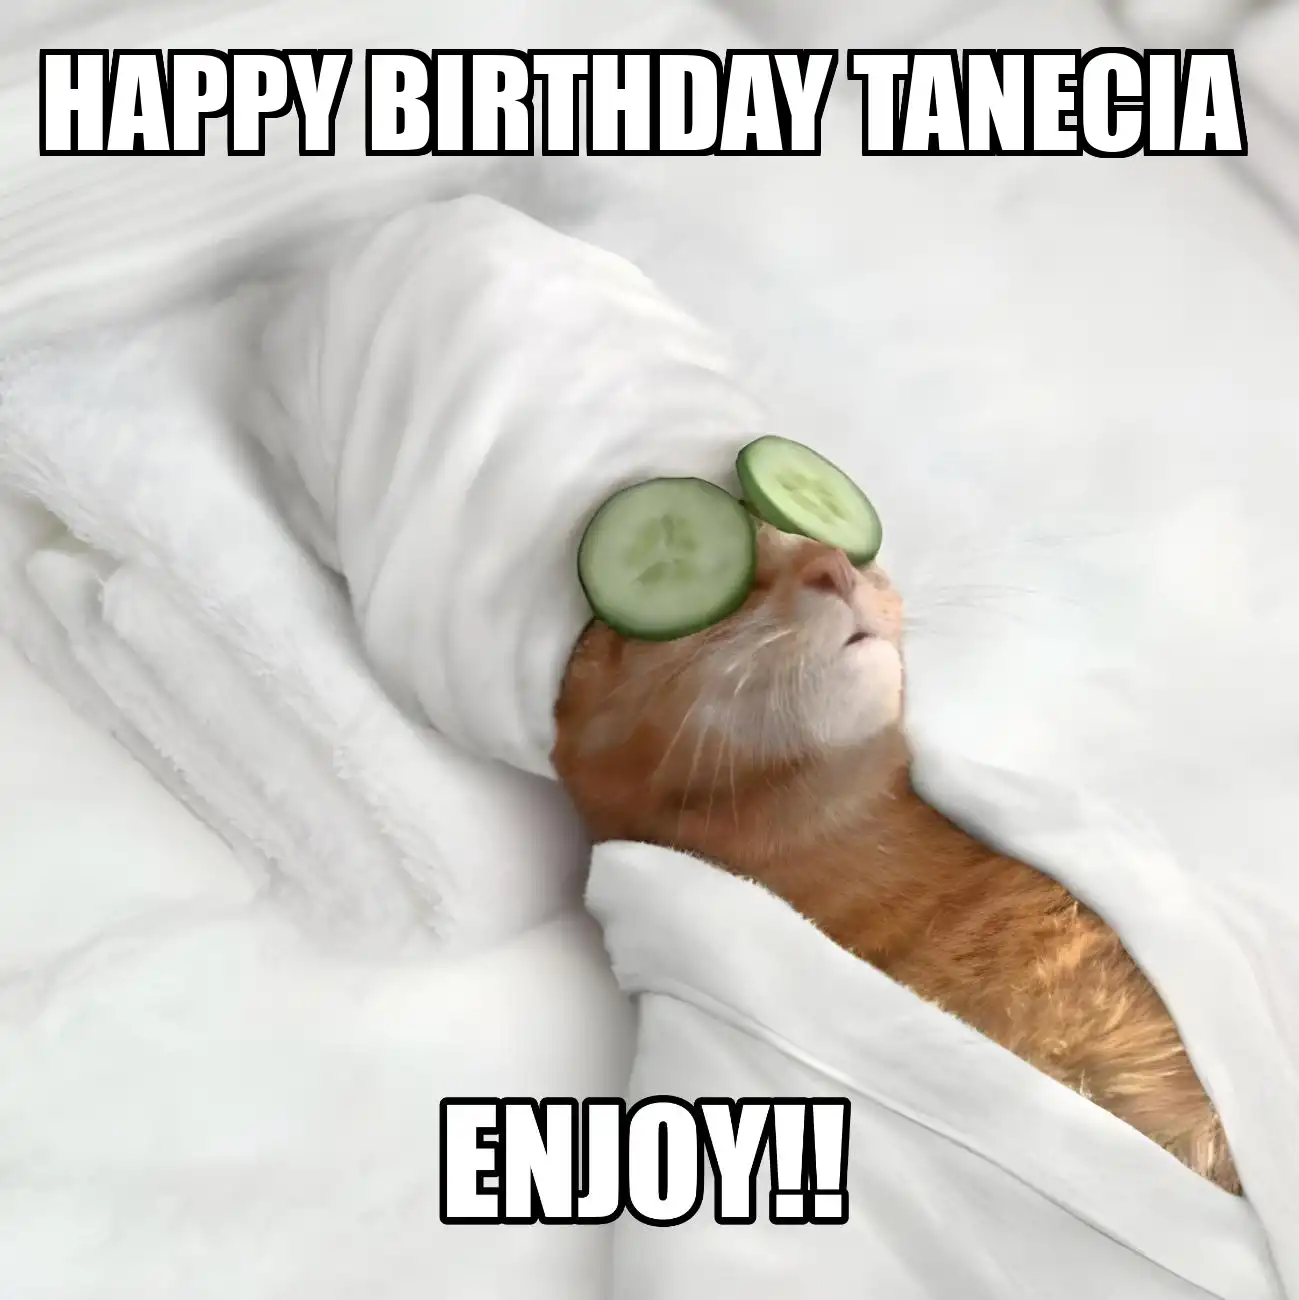 Happy Birthday Tanecia Enjoy Cat Meme